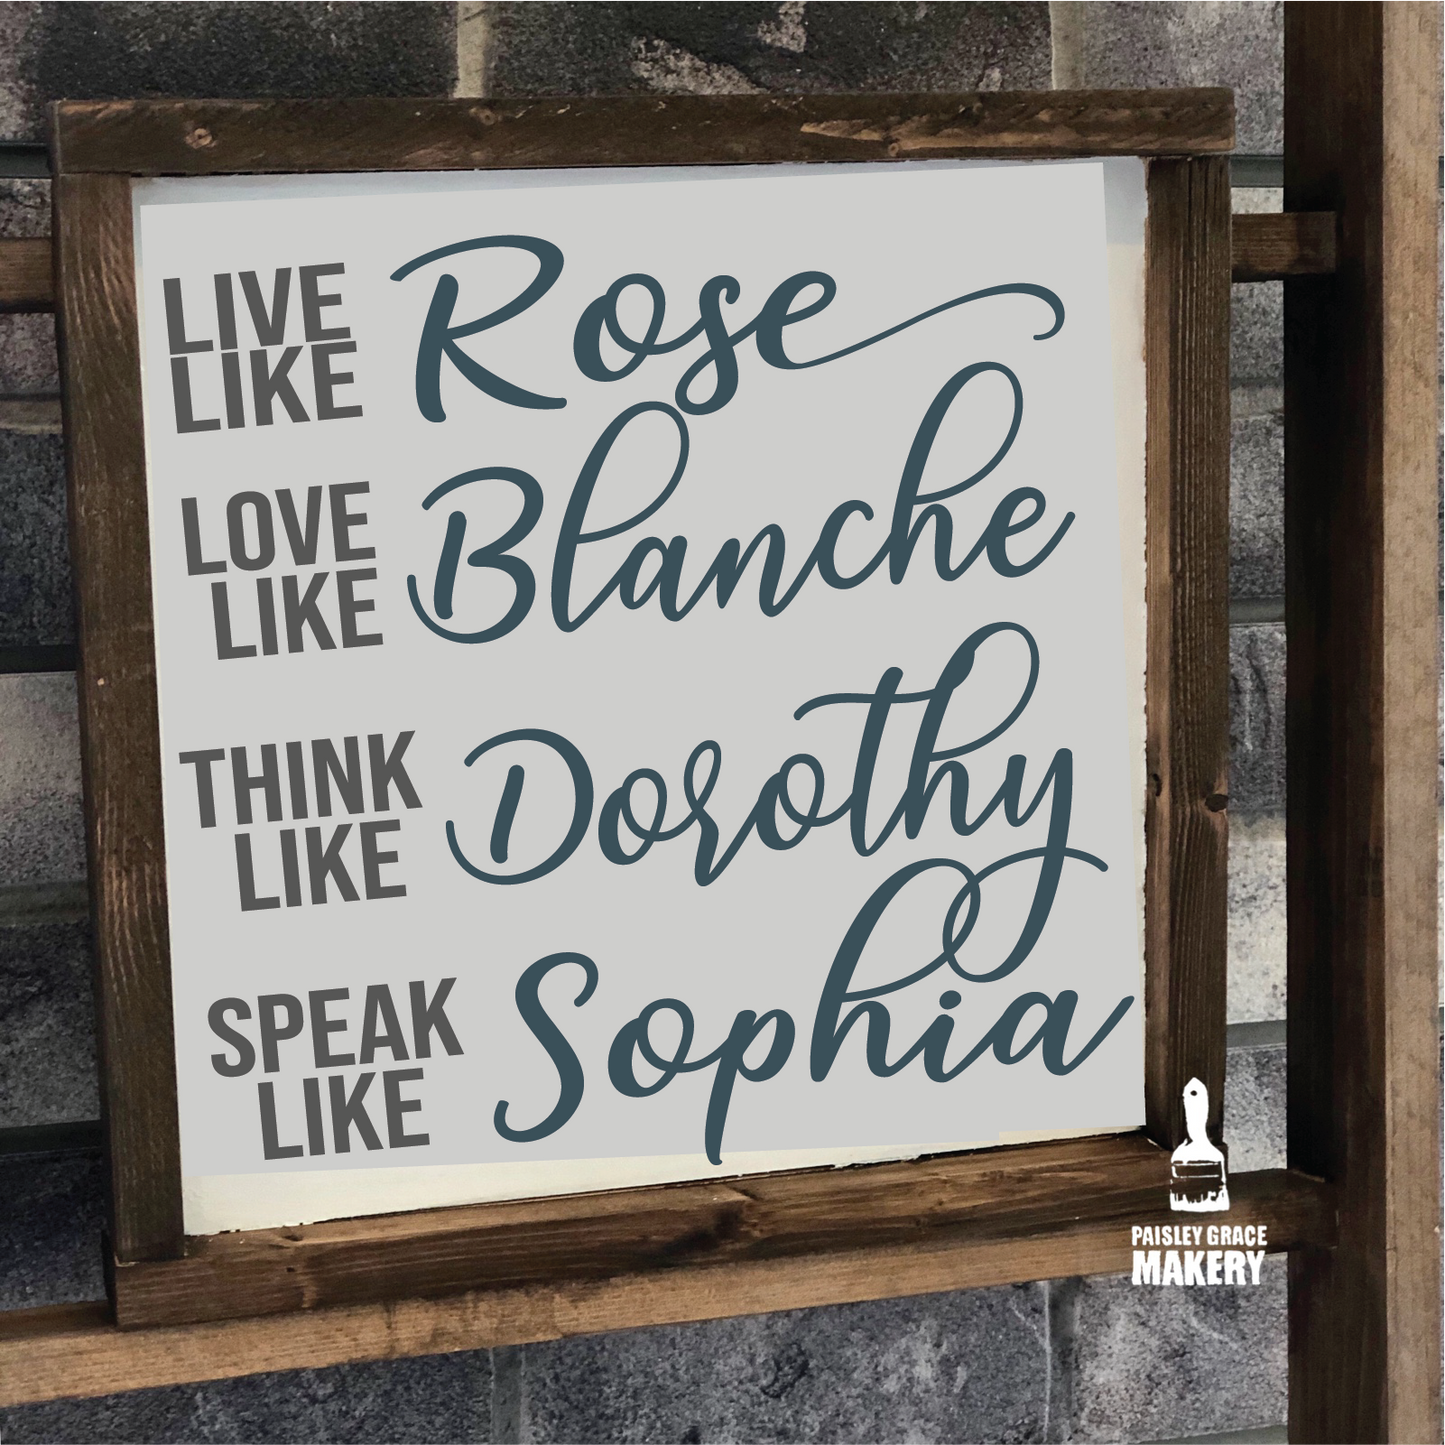 Love like Rose, Live like Blanche, Think like Dorothy, Speak like Sophia: SQUARE DESIGN - Paisley Grace Makery